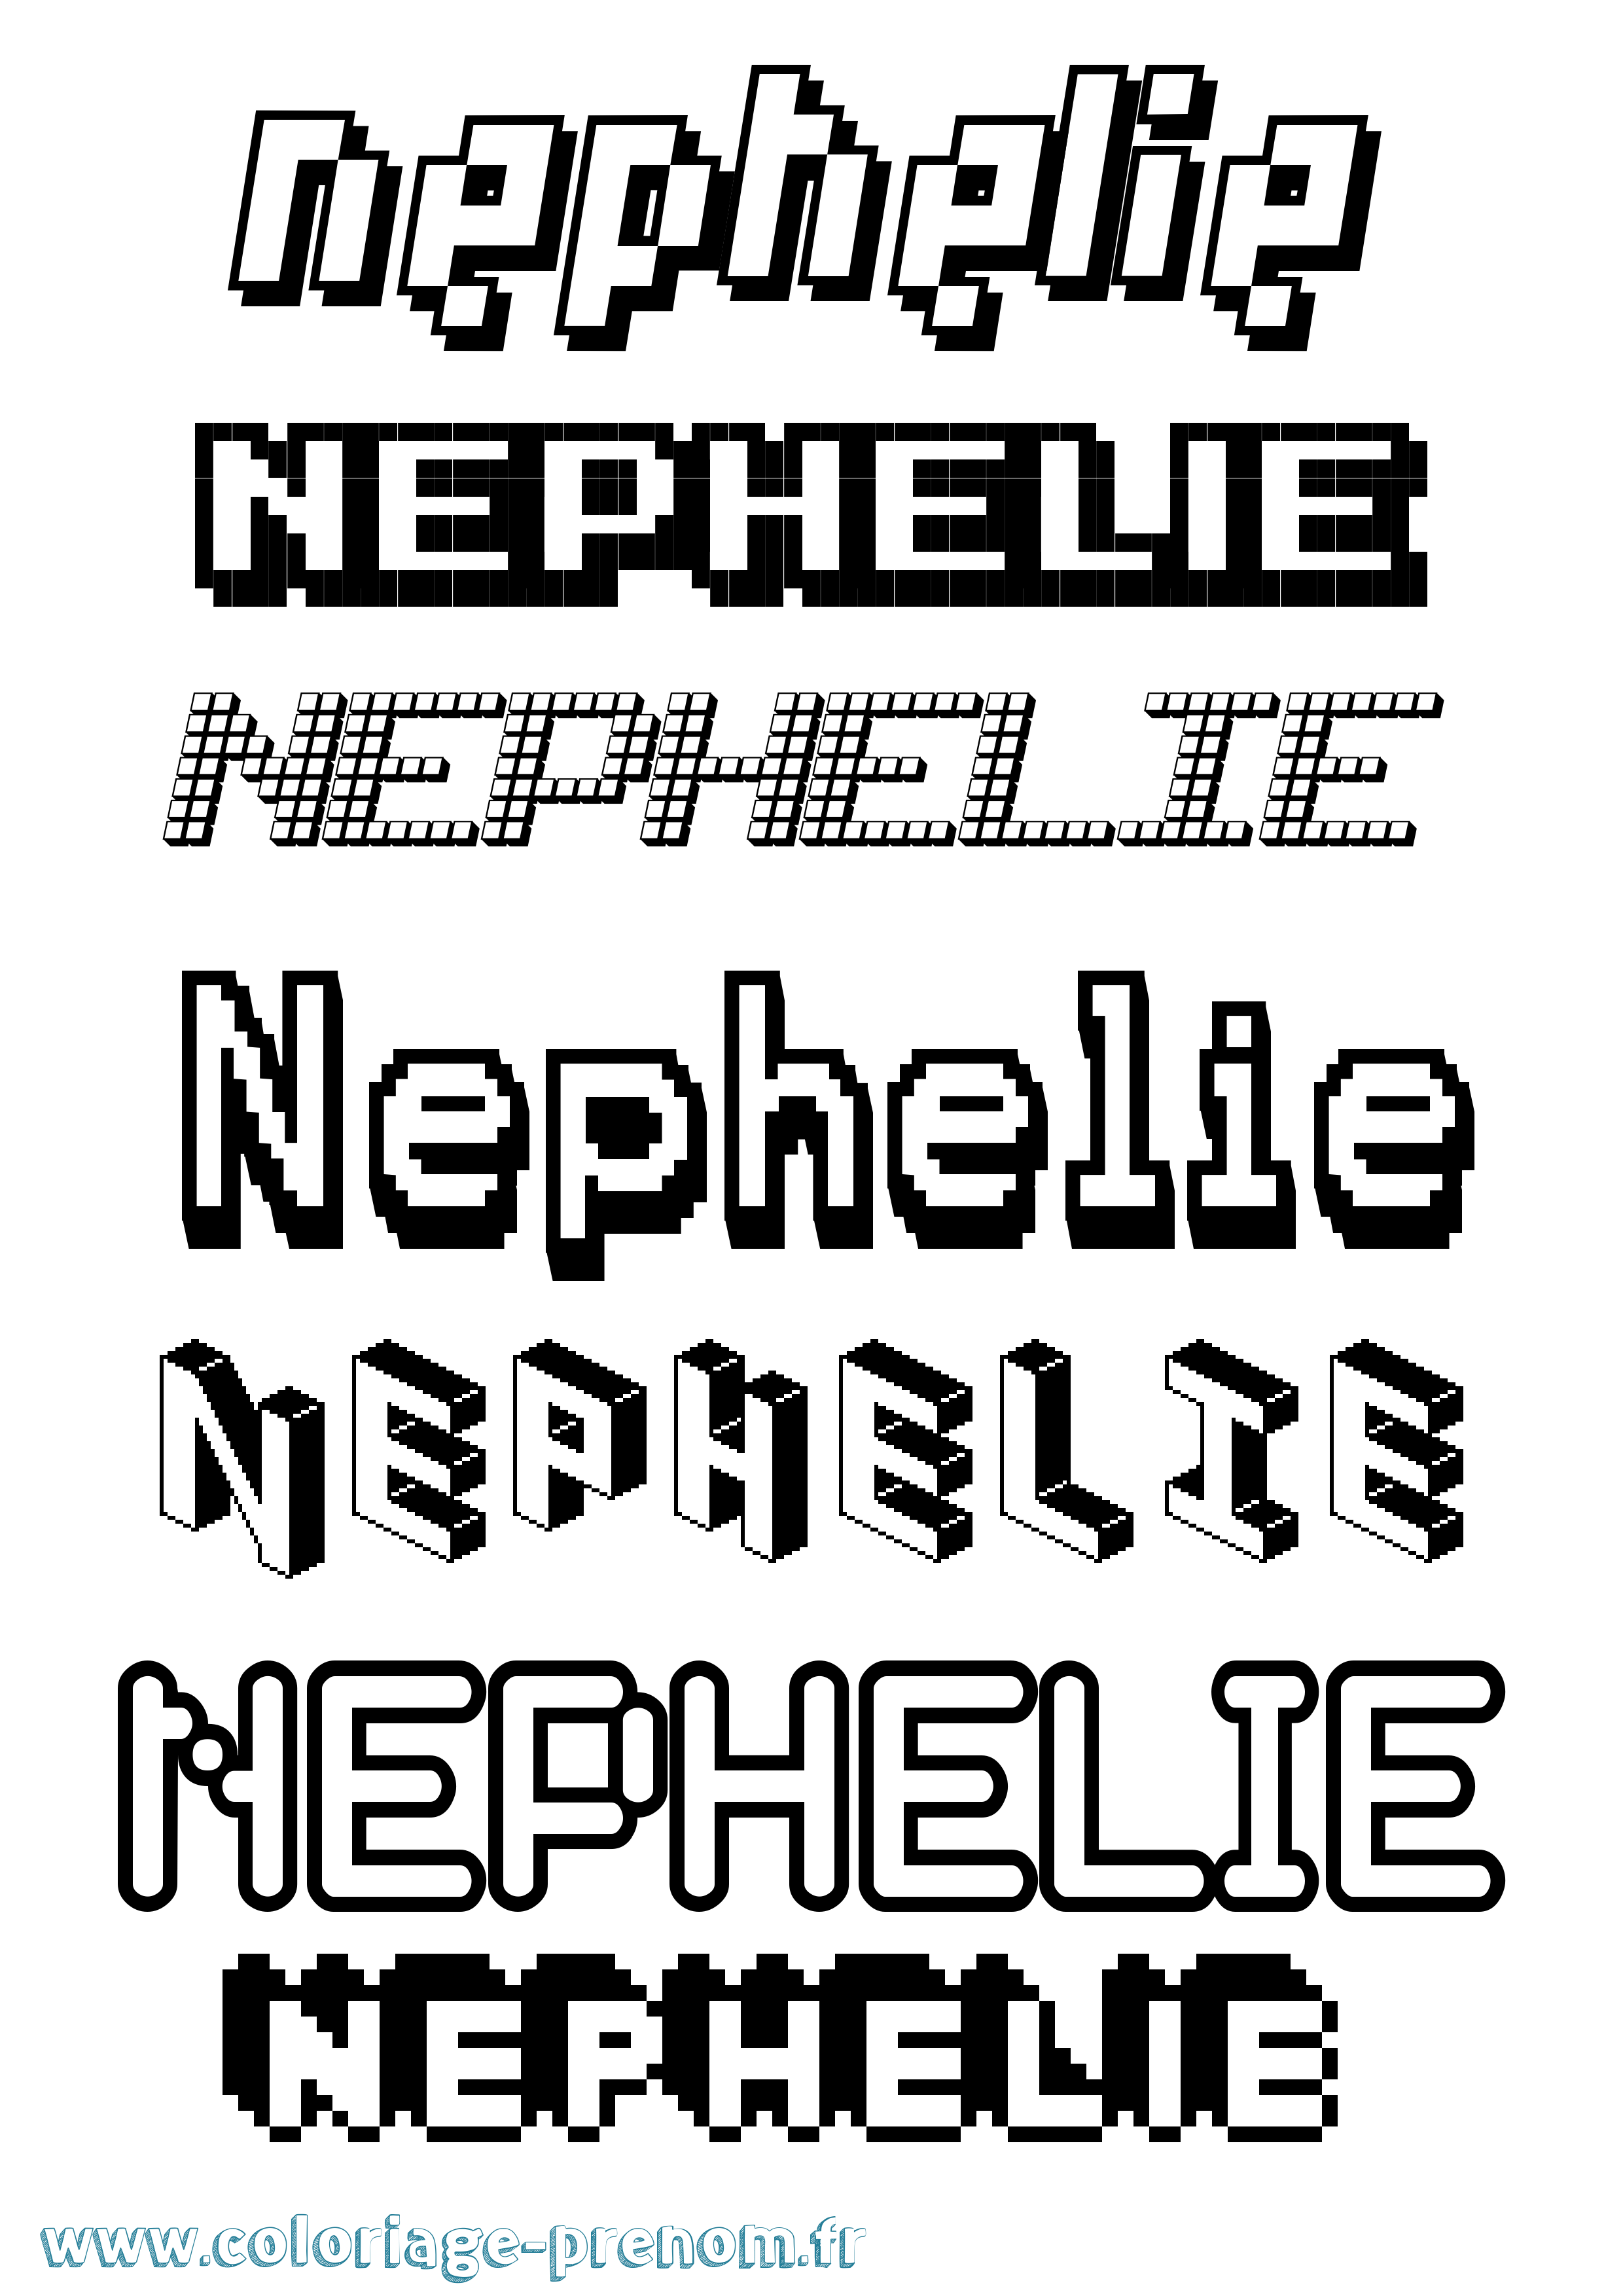 Coloriage prénom Nephelie Pixel